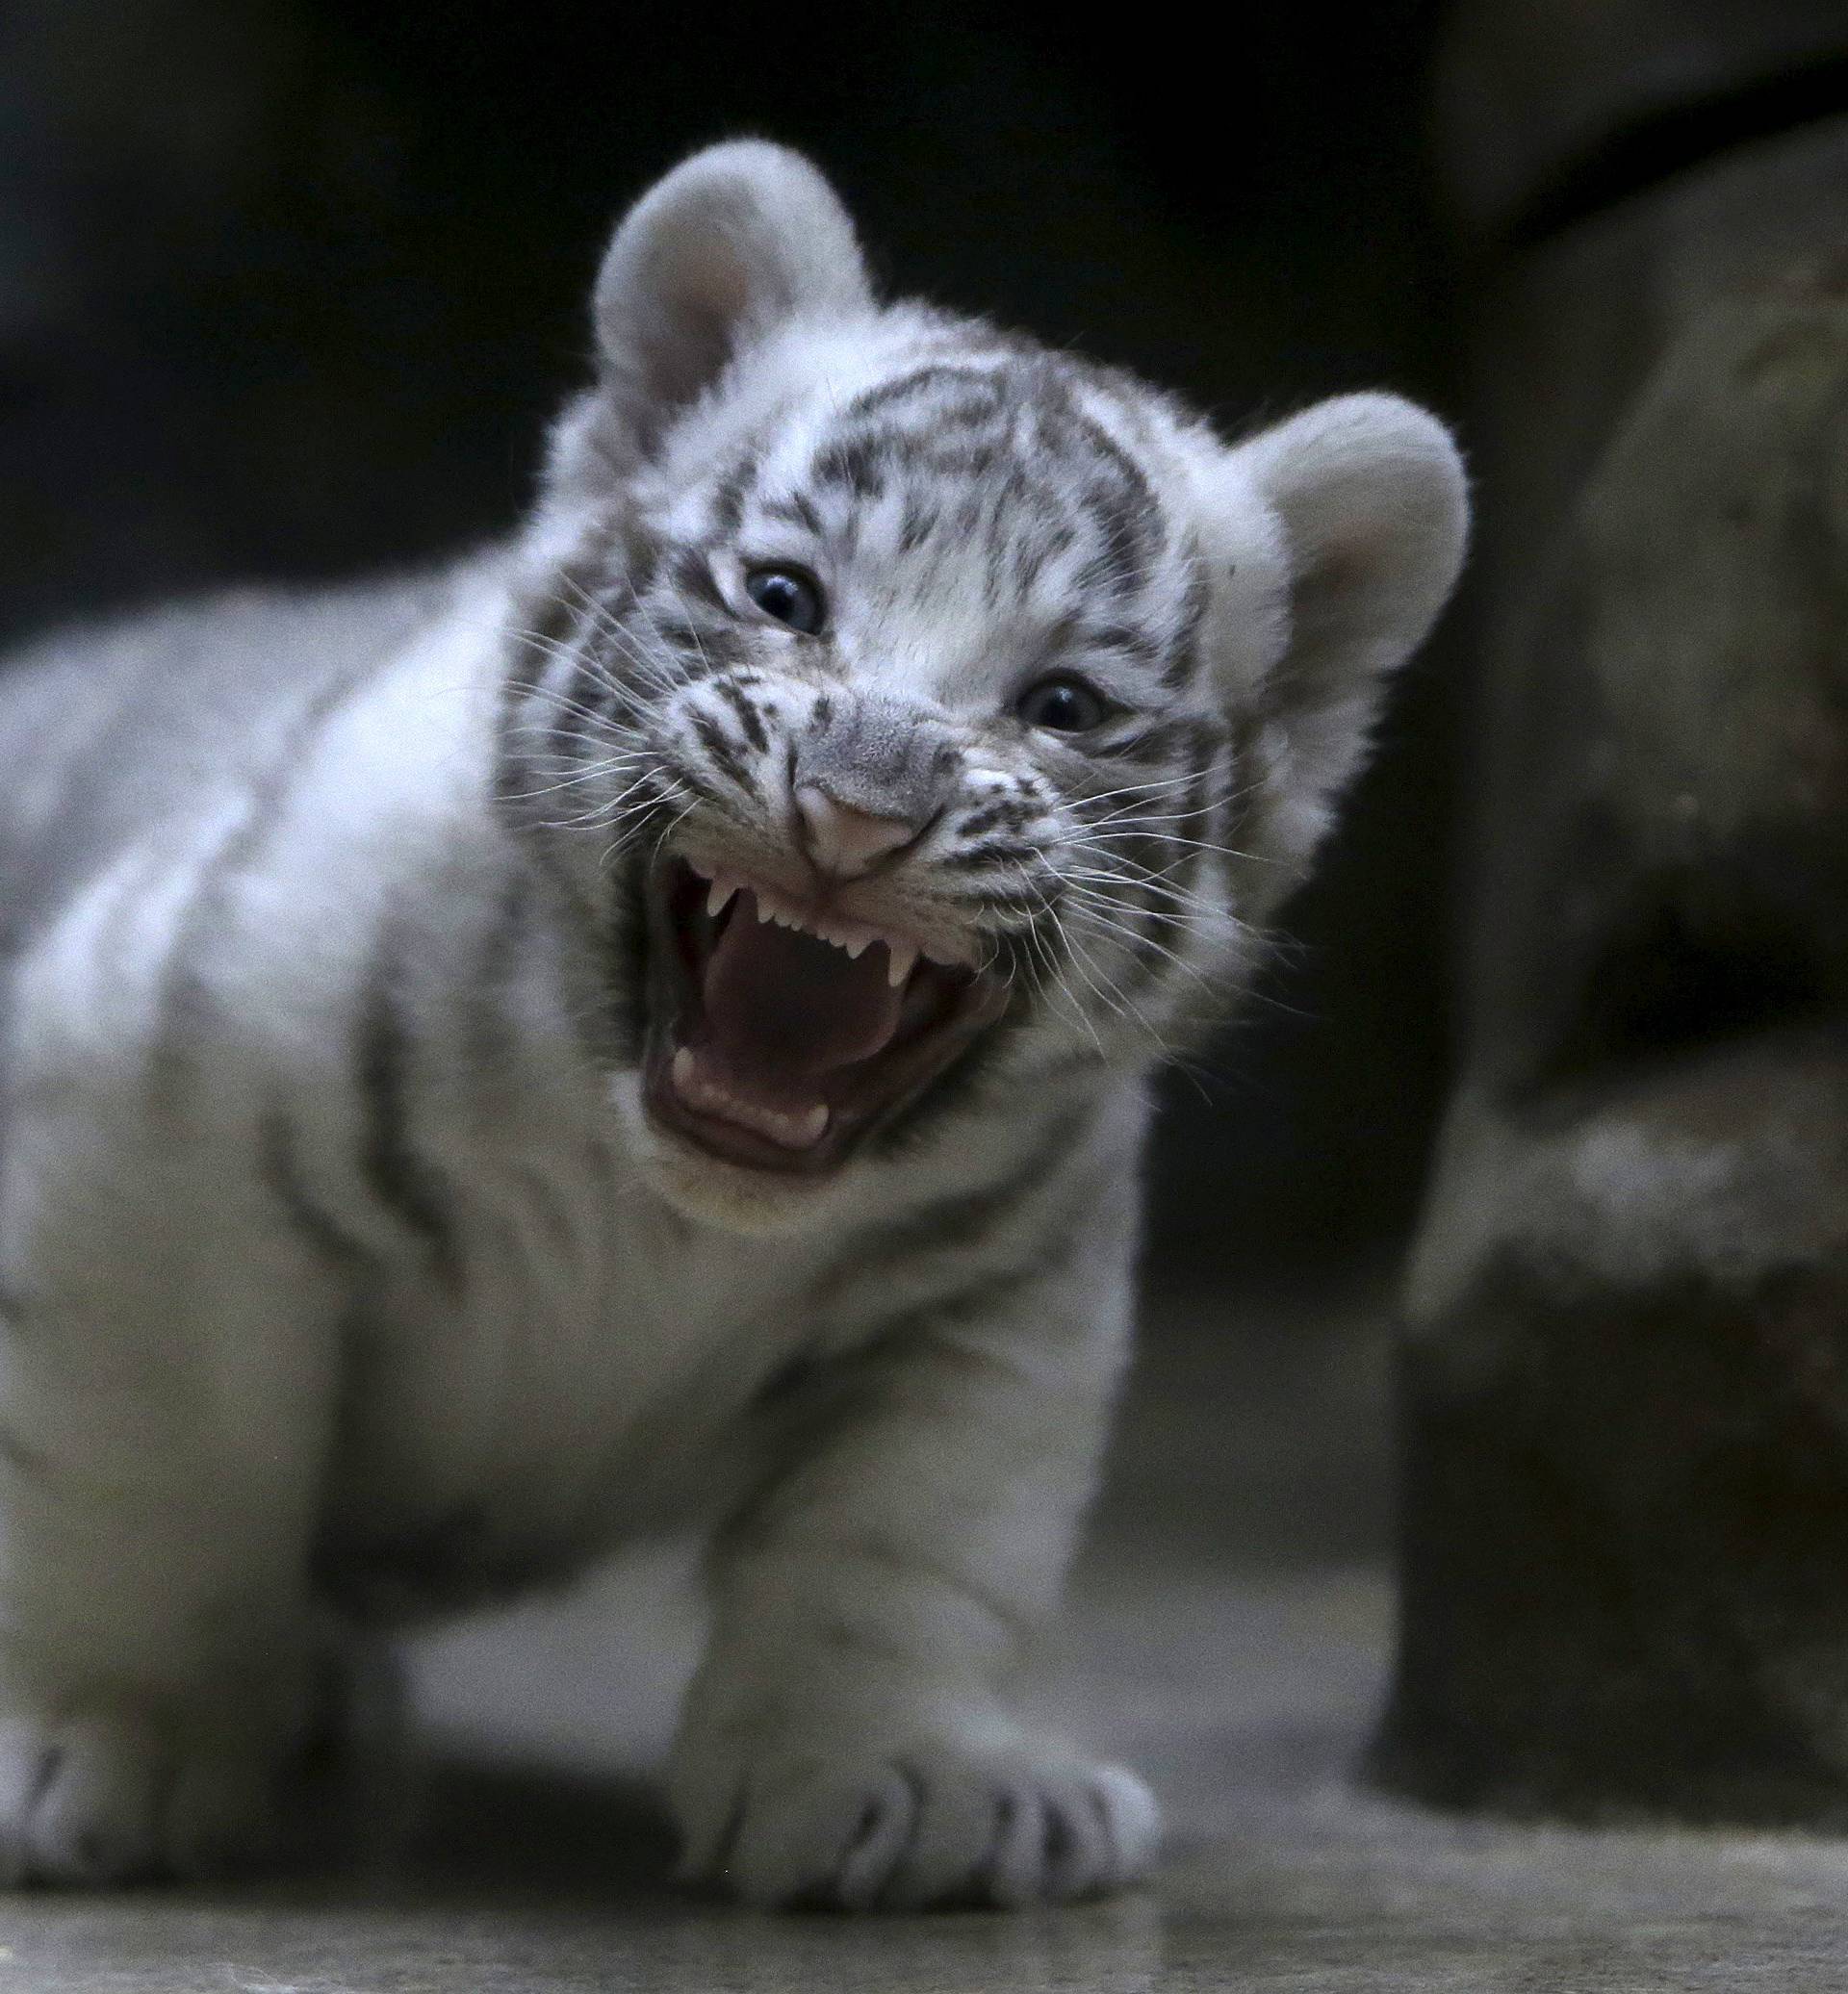 A newly born Indian white tiger cub yawns in its enclosure at Liberec Zoo